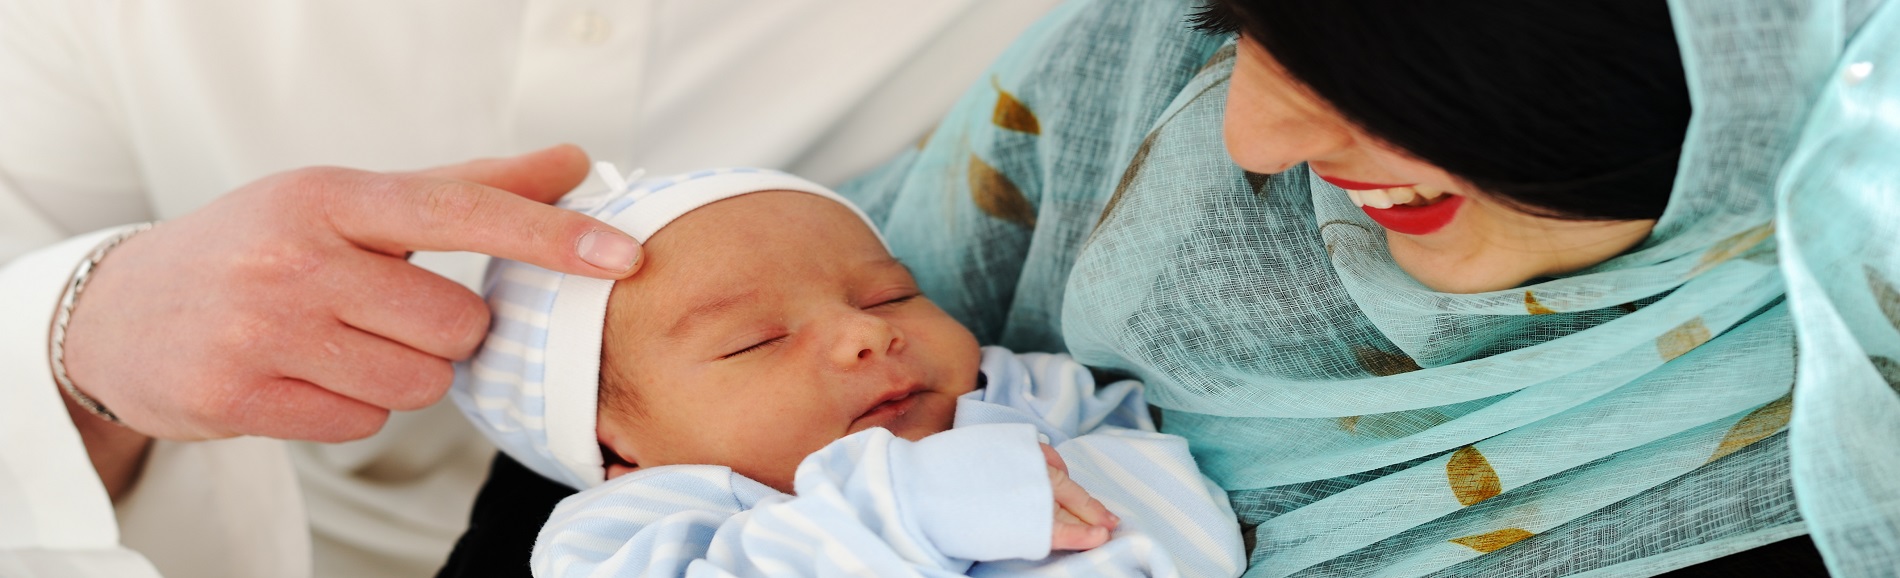 Muslim woman holding her newborn